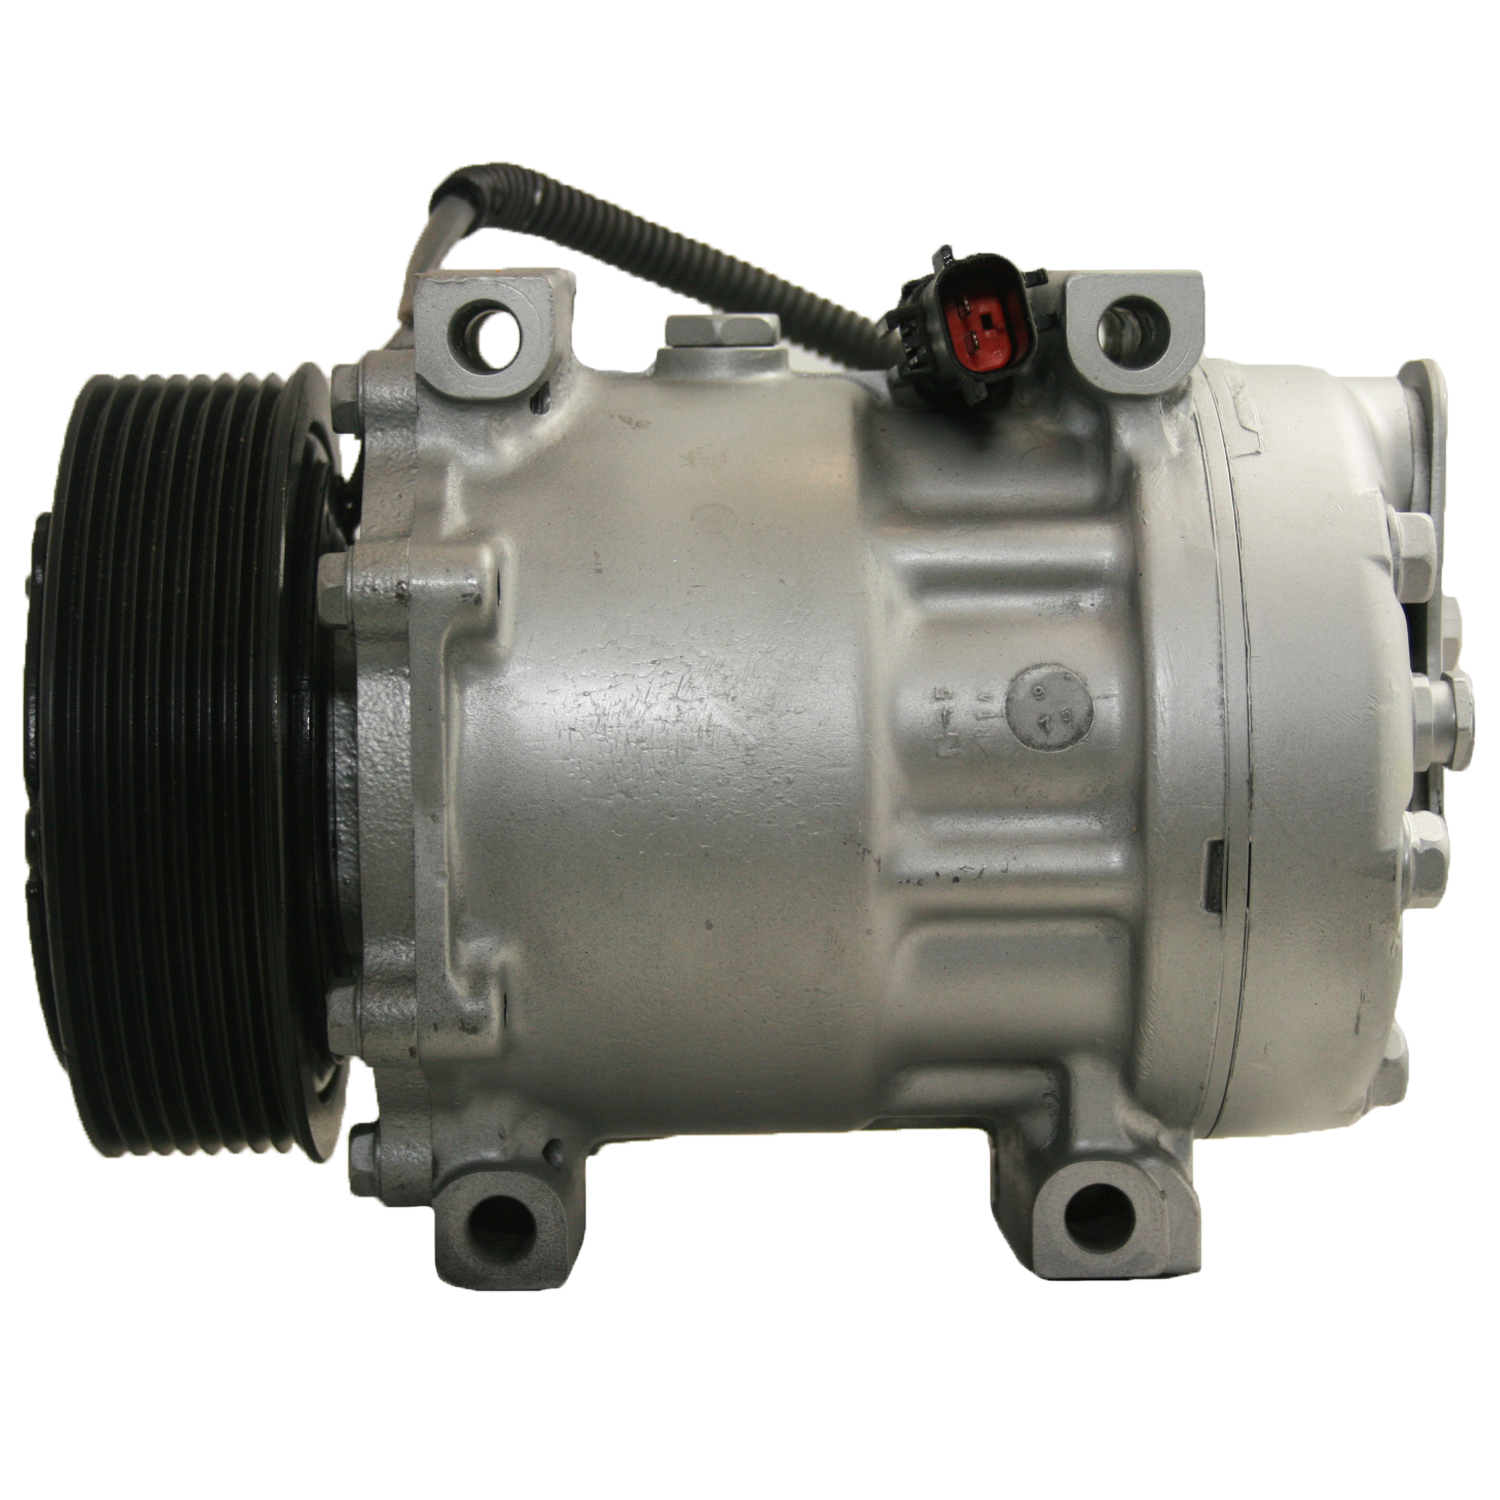 TCW Compressor 40557.801 Remanufactured